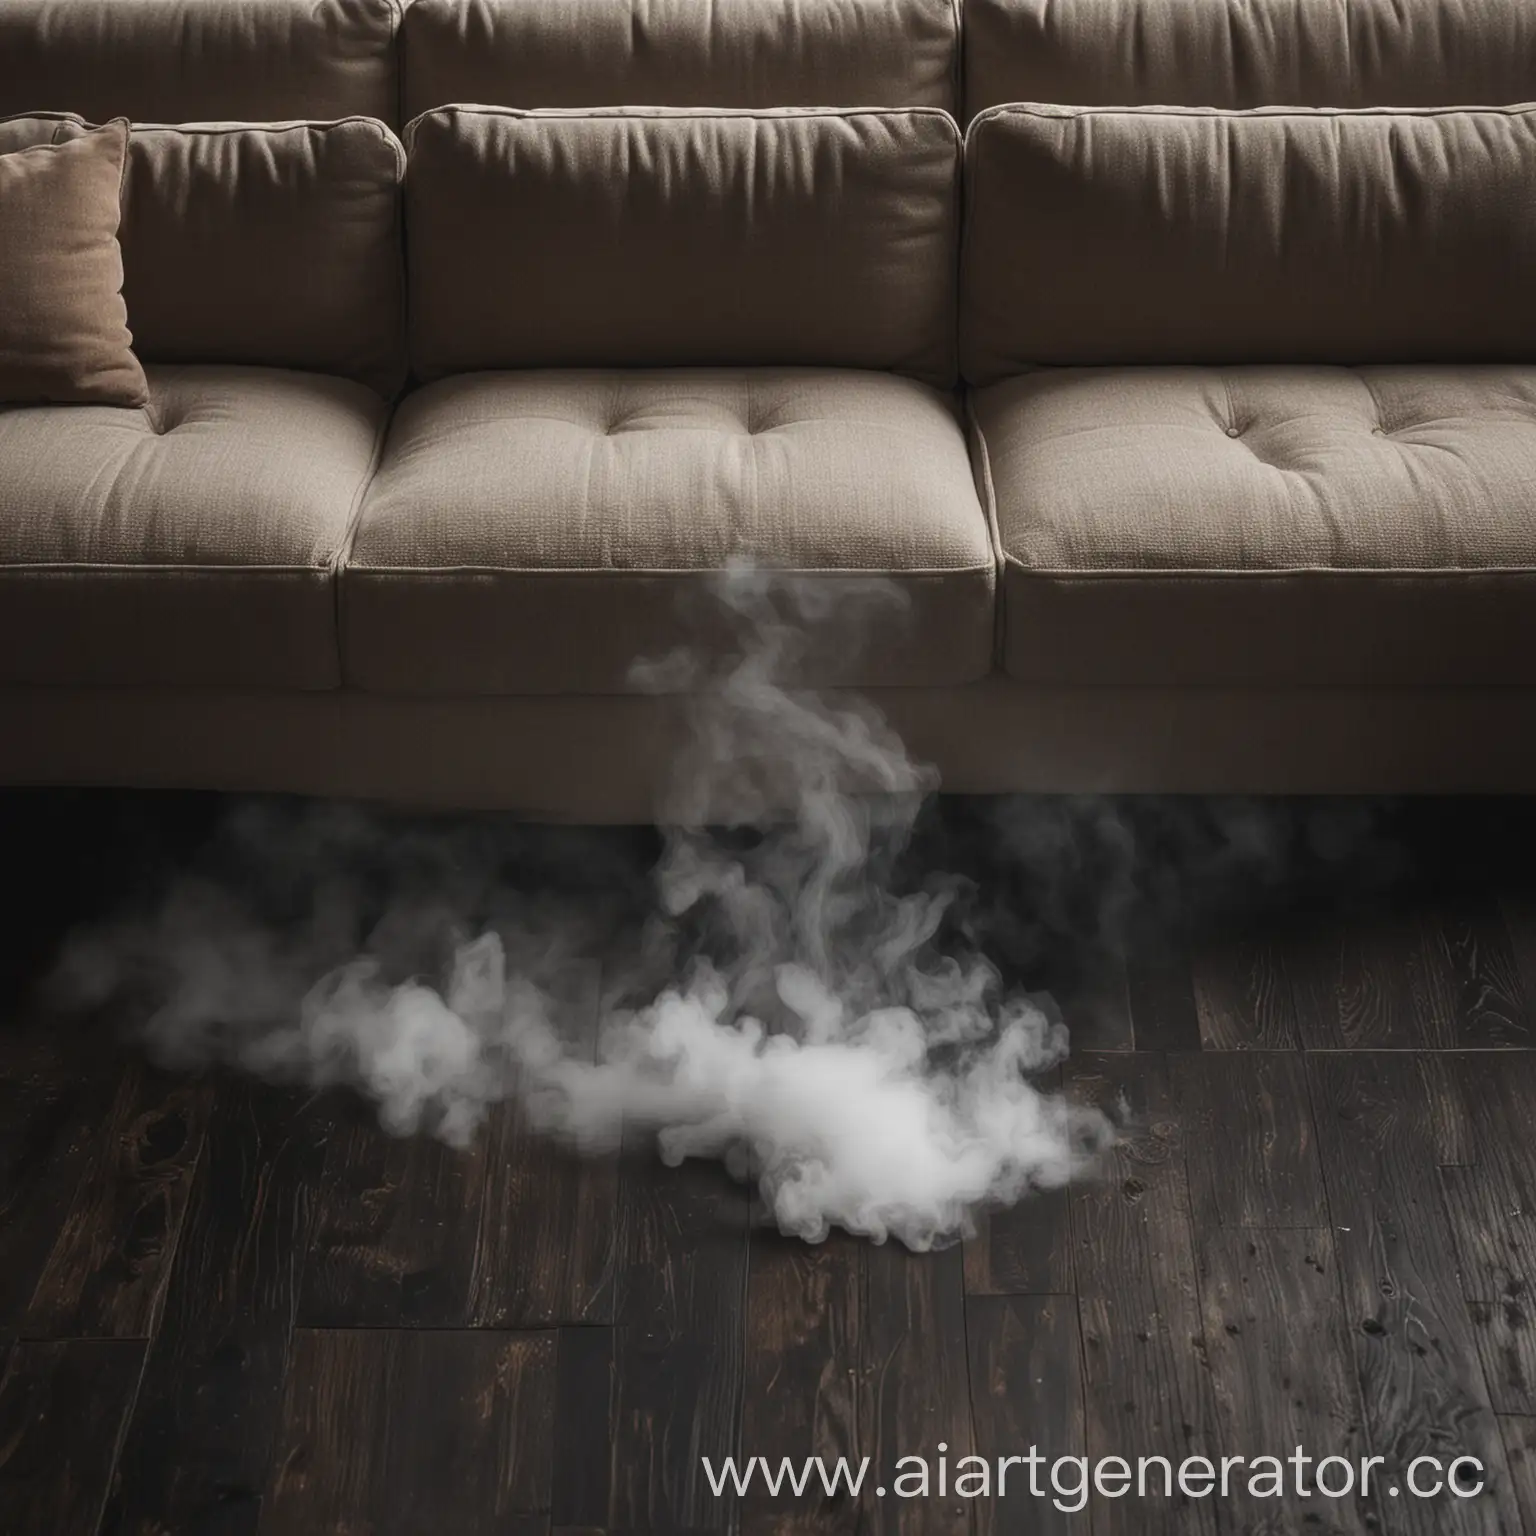 Steam-Rising-from-Dark-Floor-Behind-Soft-Couch